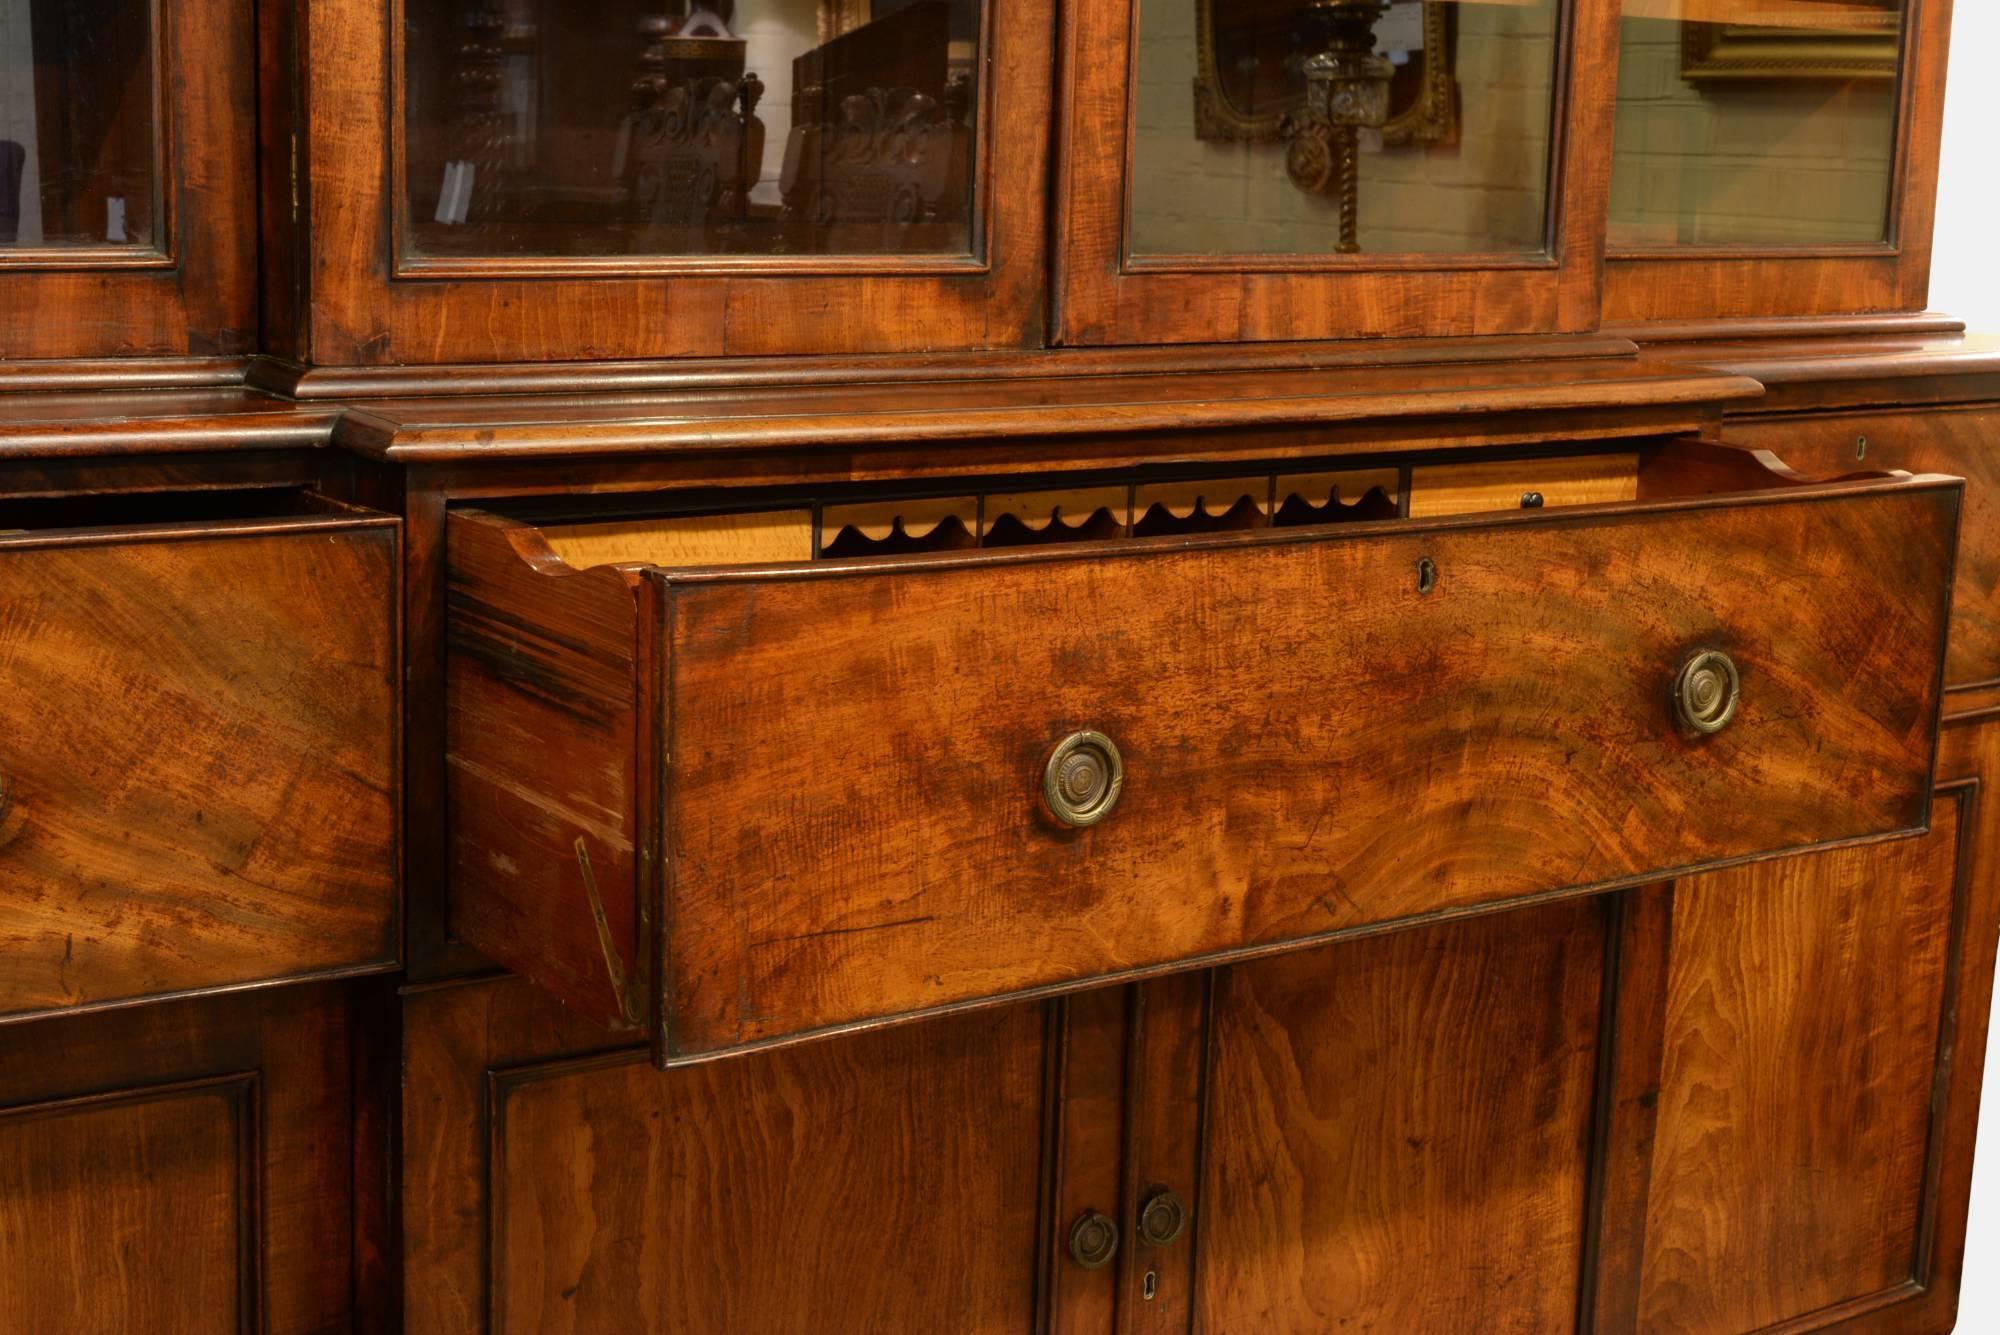 A good George III mahogany four-door secrétaire bookcase,

circa 1800.
Measures:
226cm (89.0